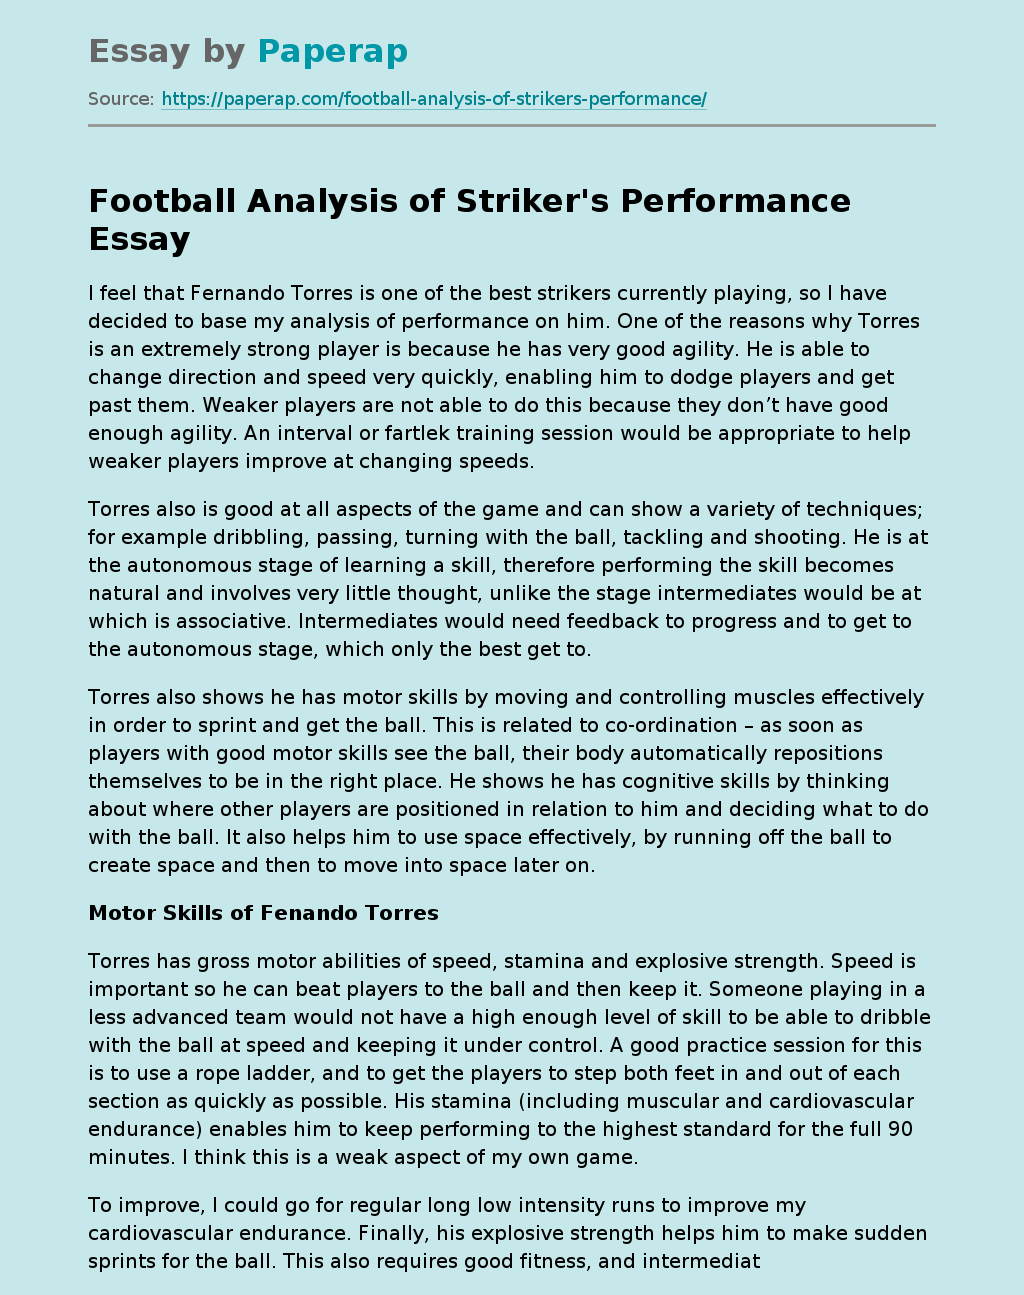 Football Analysis of Striker's Performance